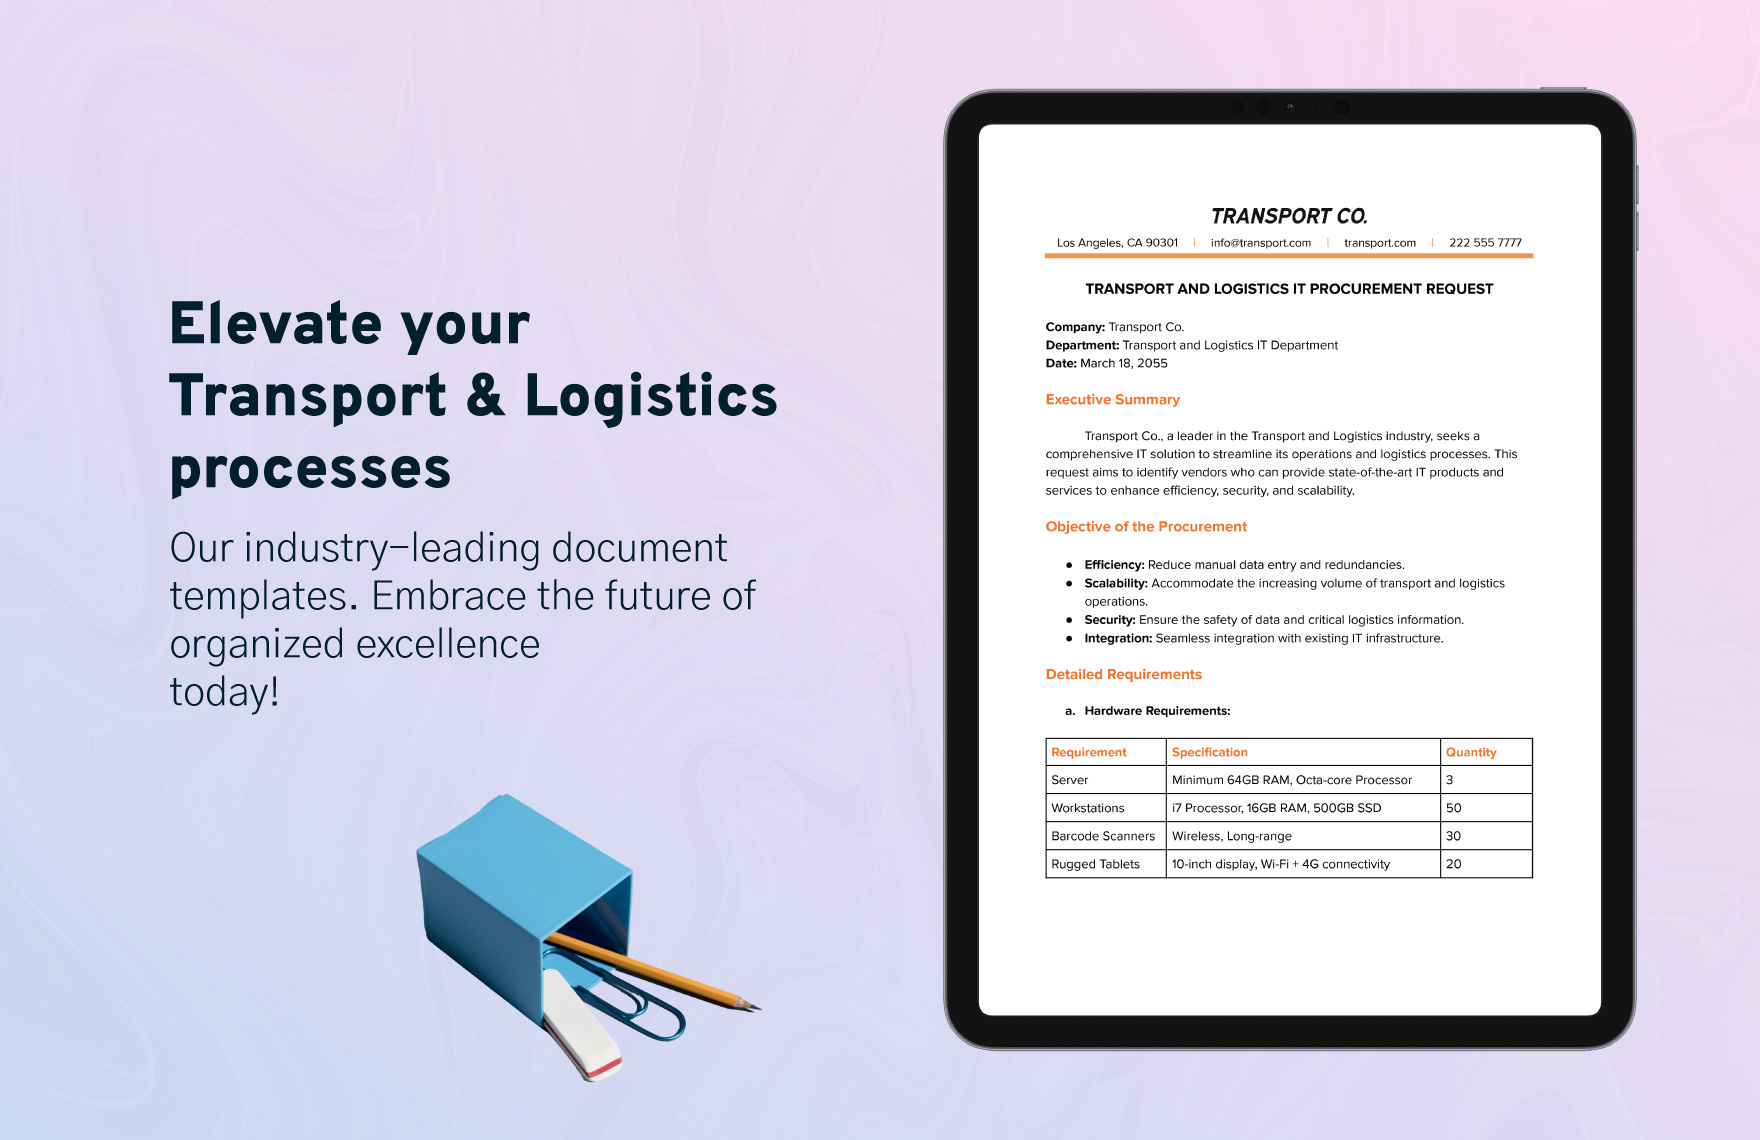 Transport and Logistics IT Procurement Request Template